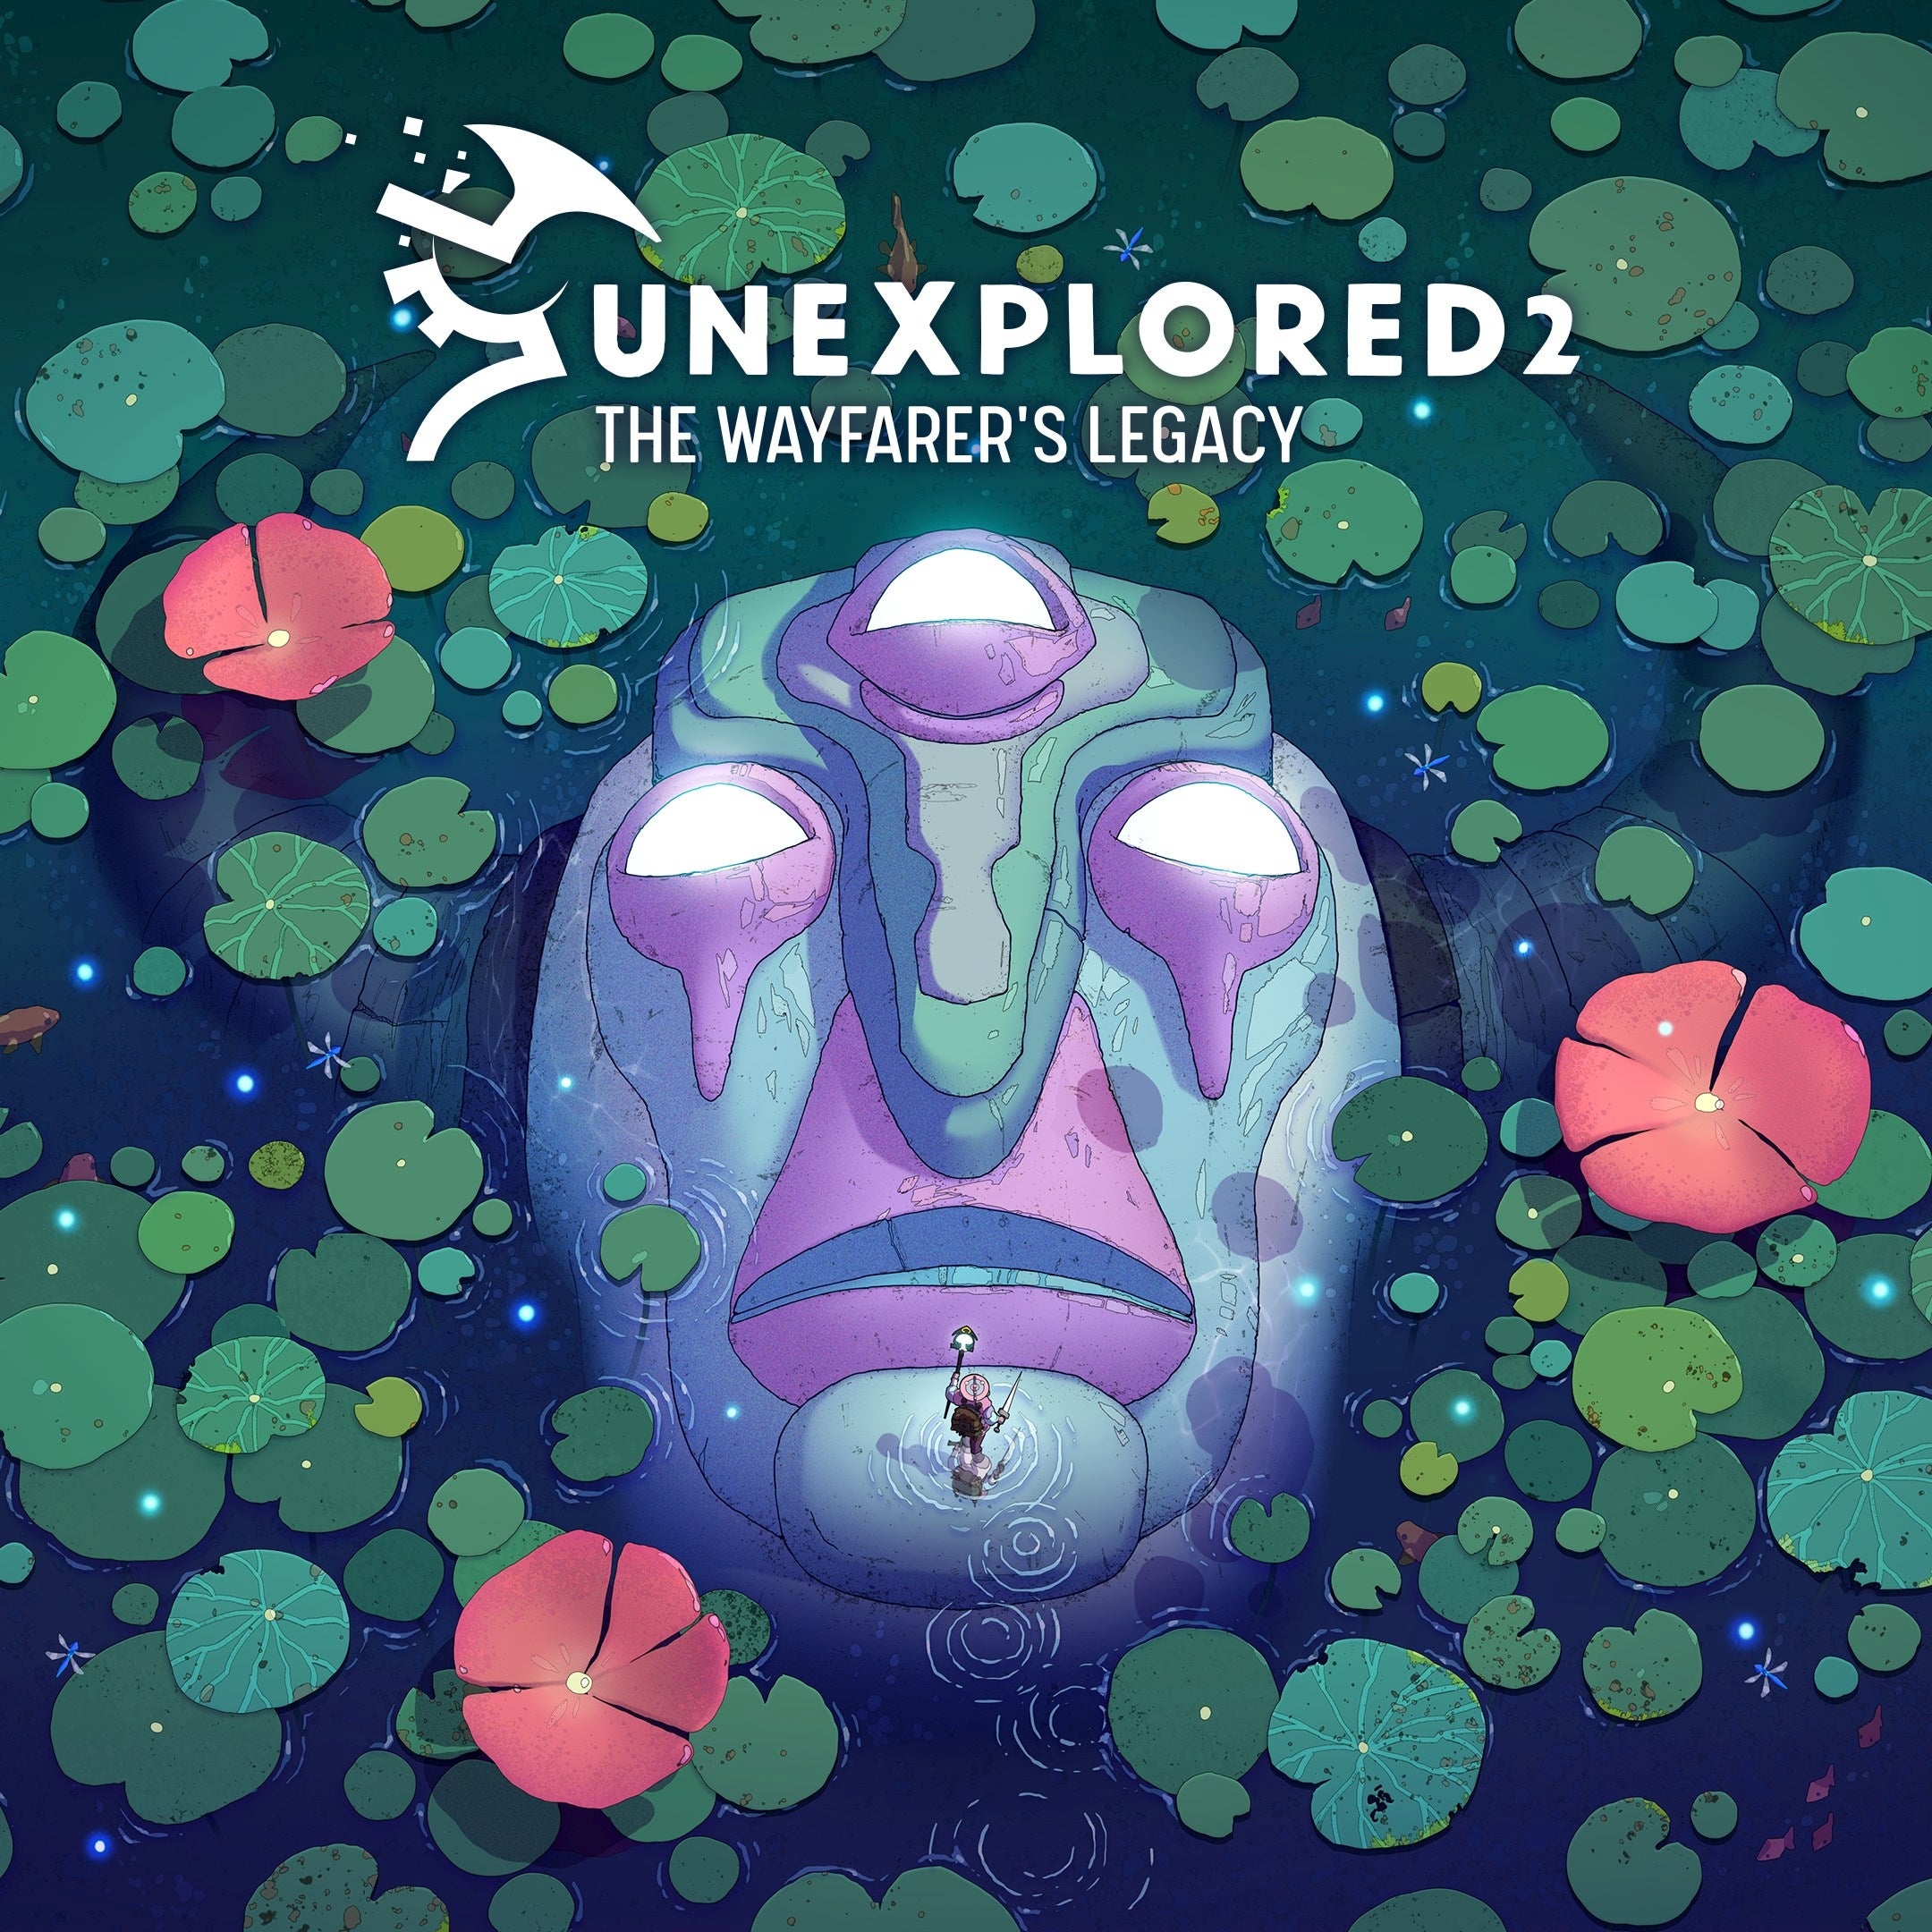 Обложка к игре Unexplored 2: The Wayfarer’s Legacy